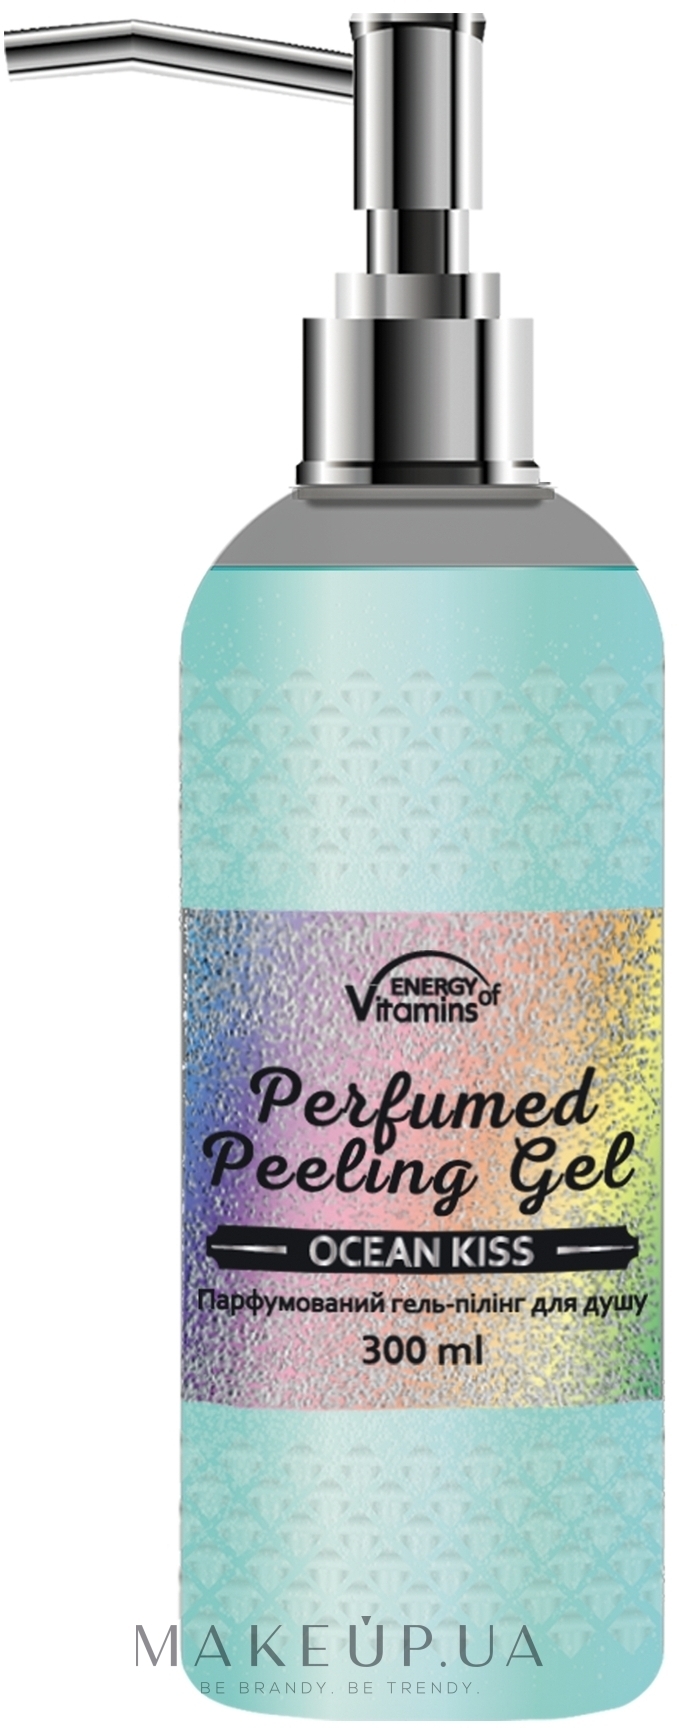 Парфюмированный гель-пилинг для душа - Energy of Vitamins Perfumed Peeling Gel Ocean Kiss — фото 300ml